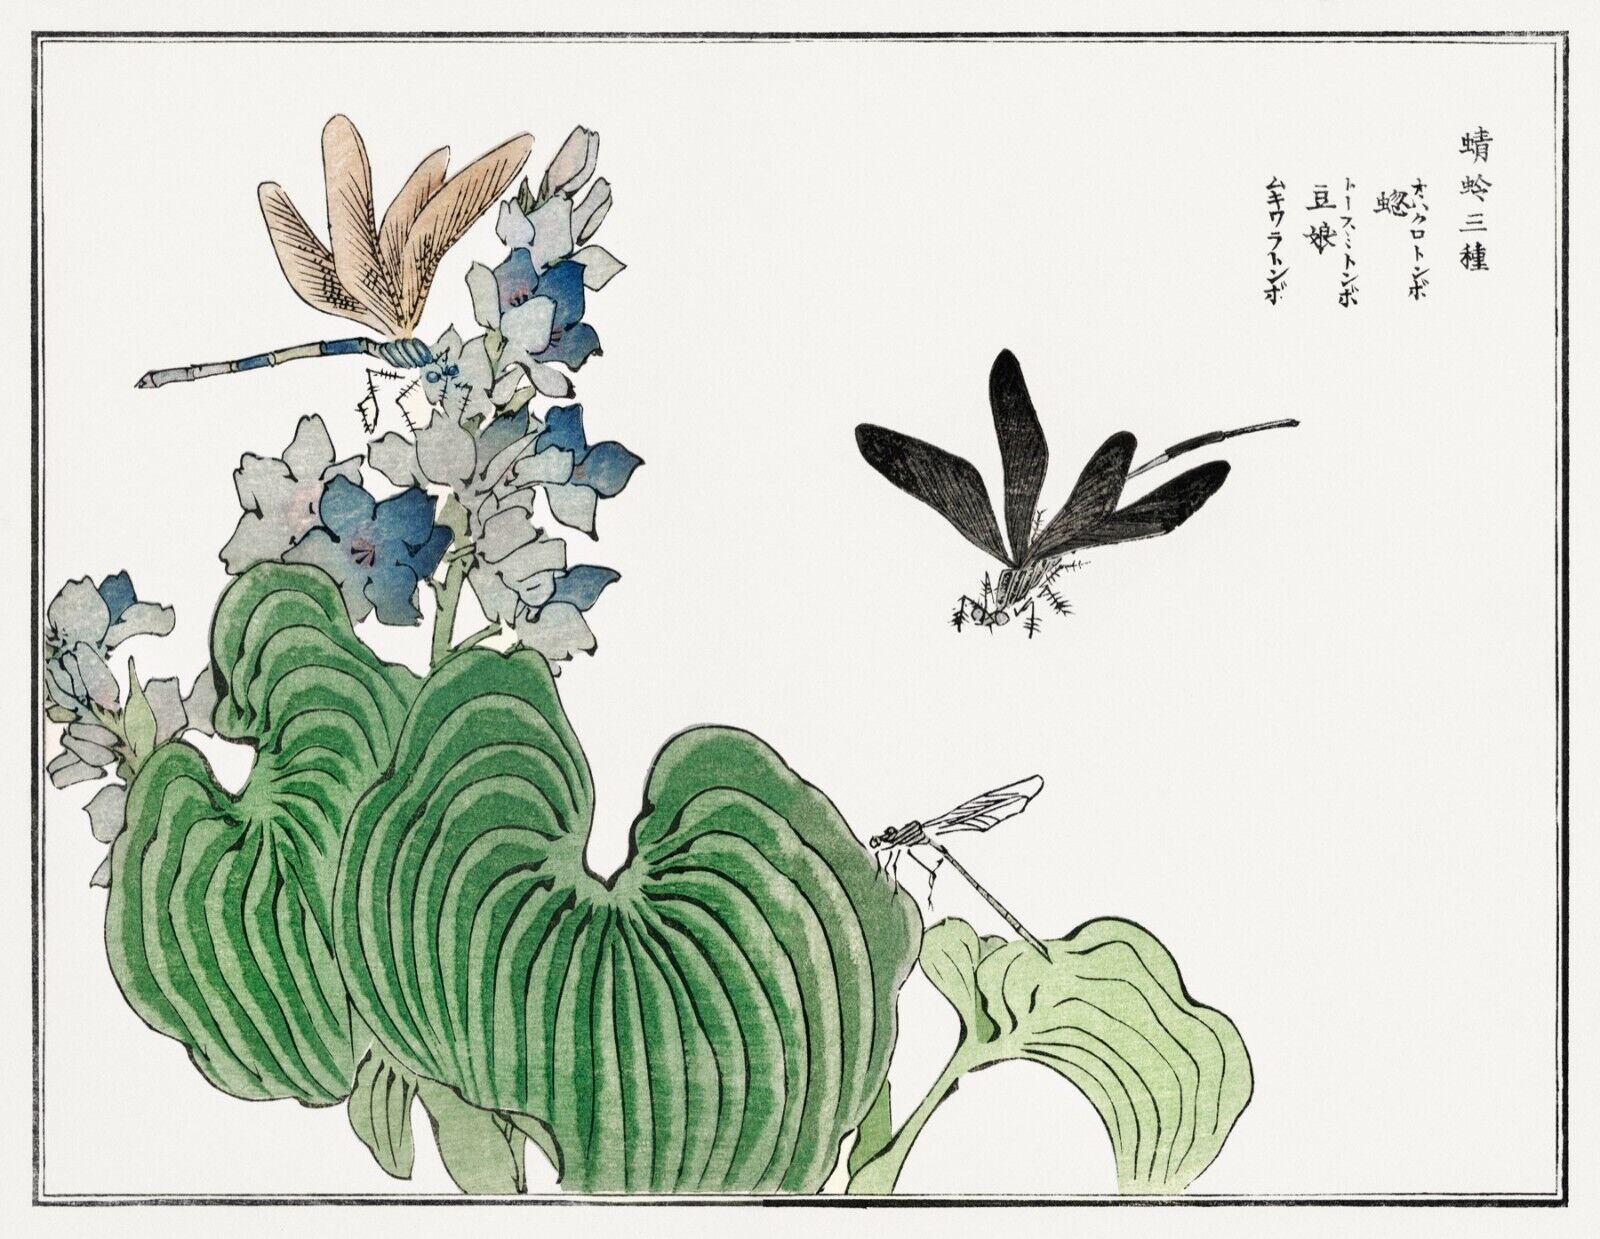 10074.Decor Poster.Room home wall.1910 Japan print.Morimoto Toko art.Butterflies